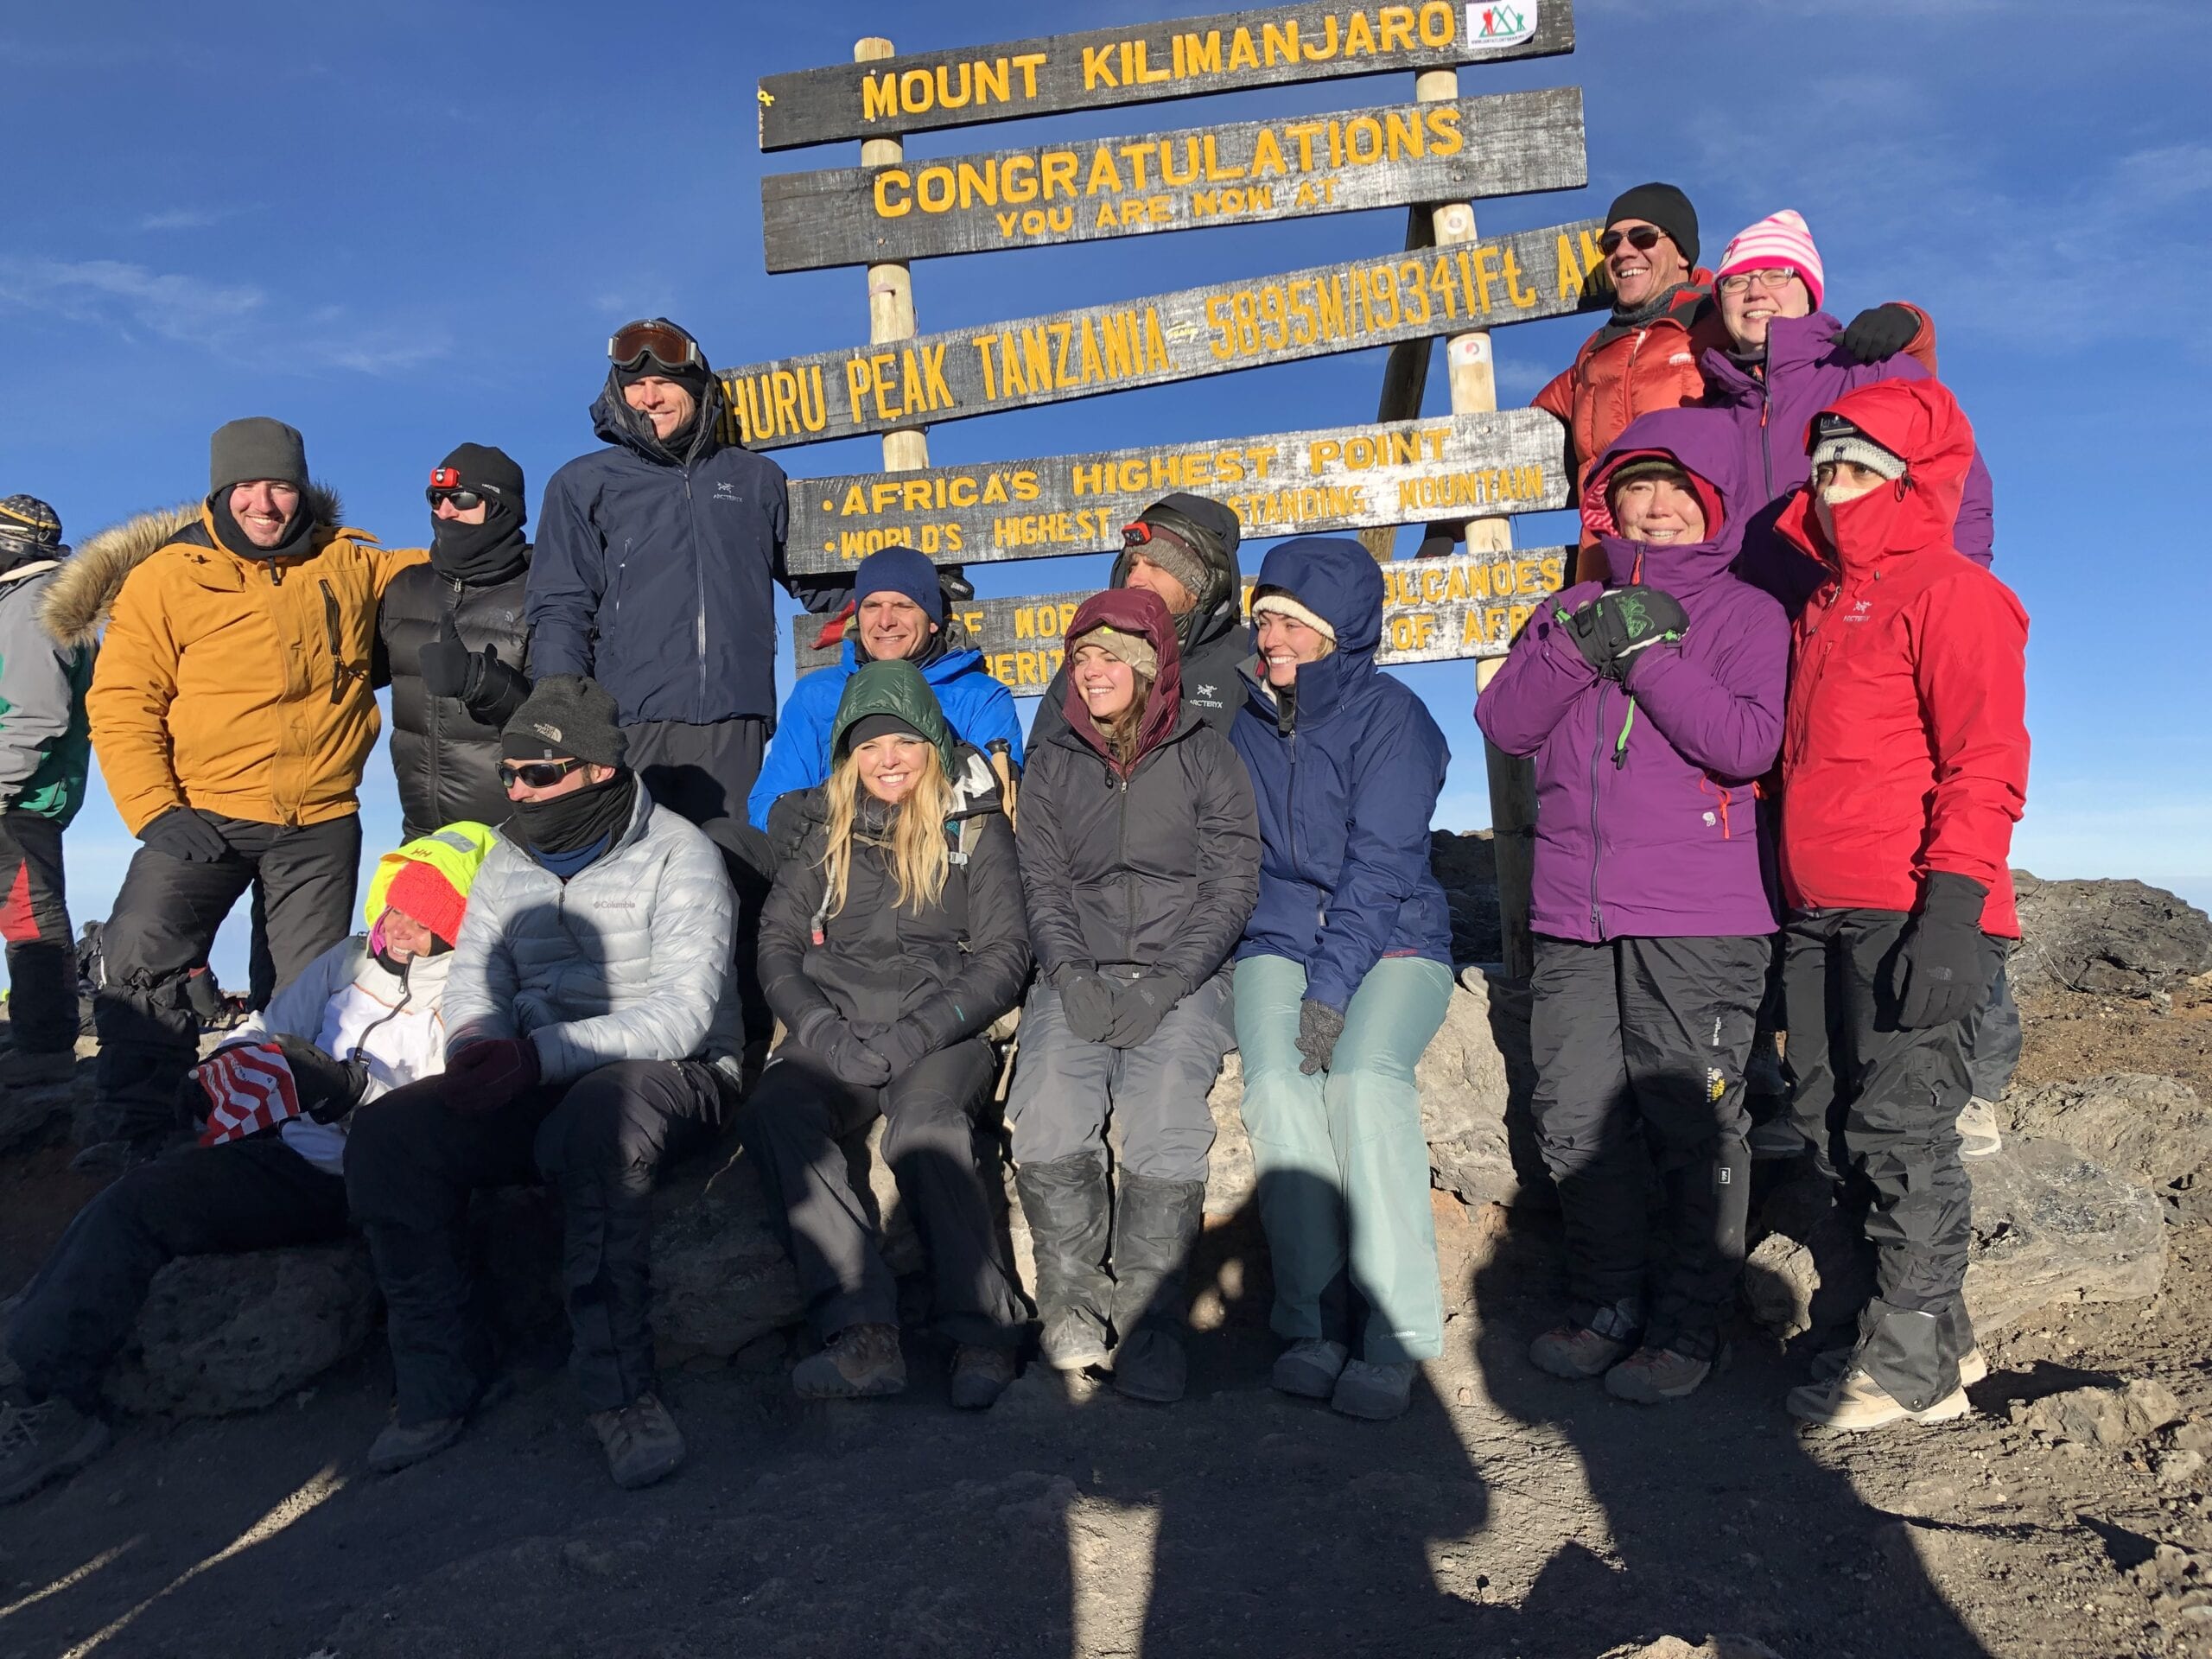 Altitude Tent for Kilimanjaro